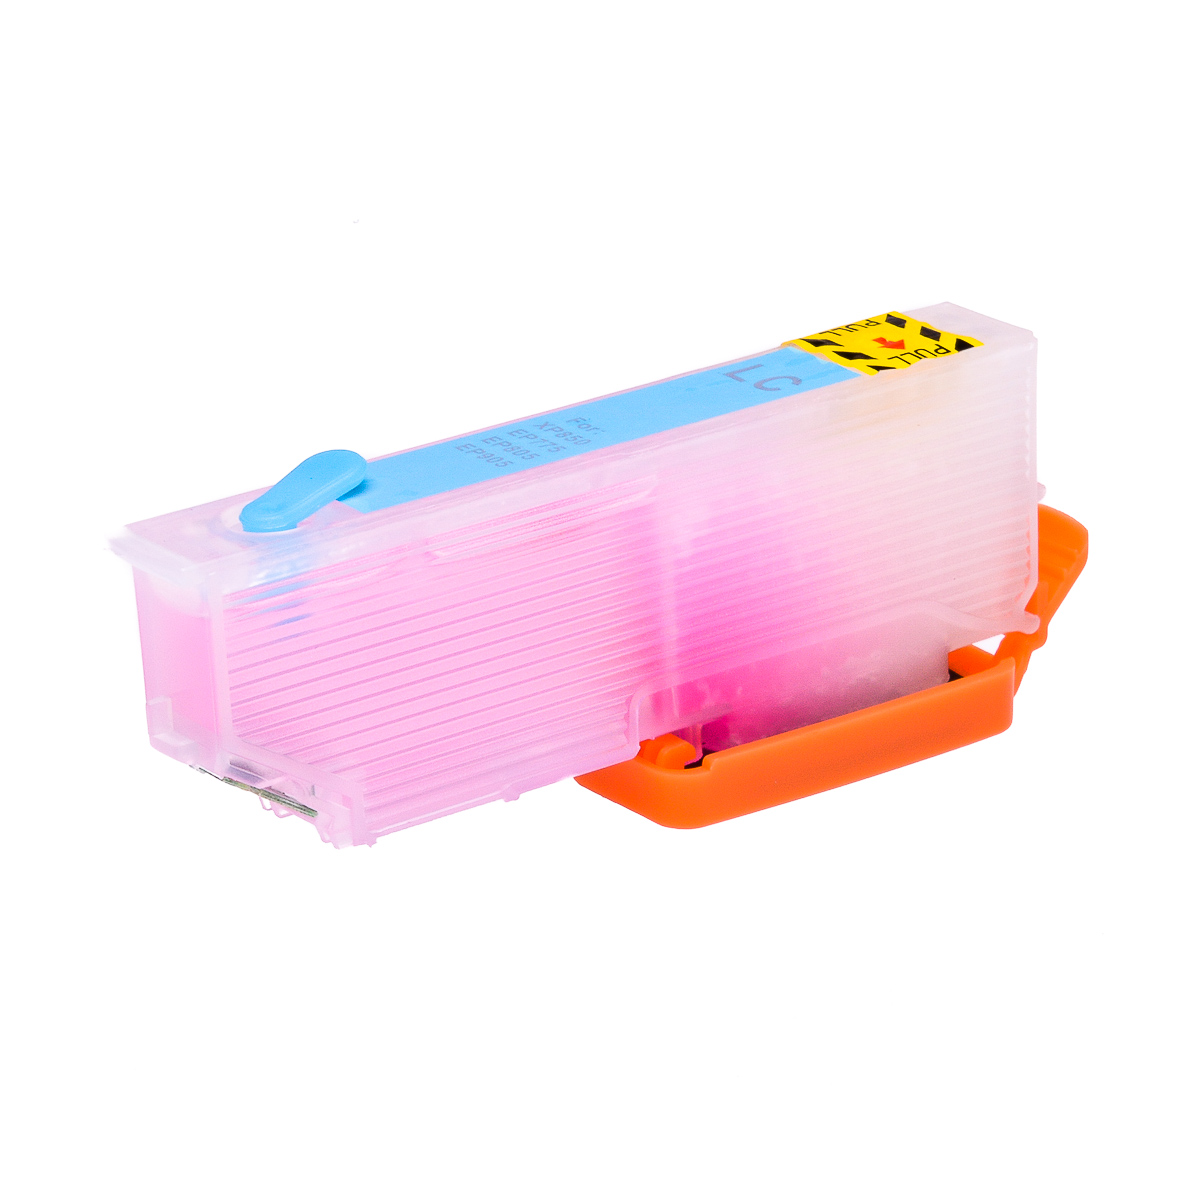 Light Cyan printhead cleaning cartridge for Epson XP-750 printer